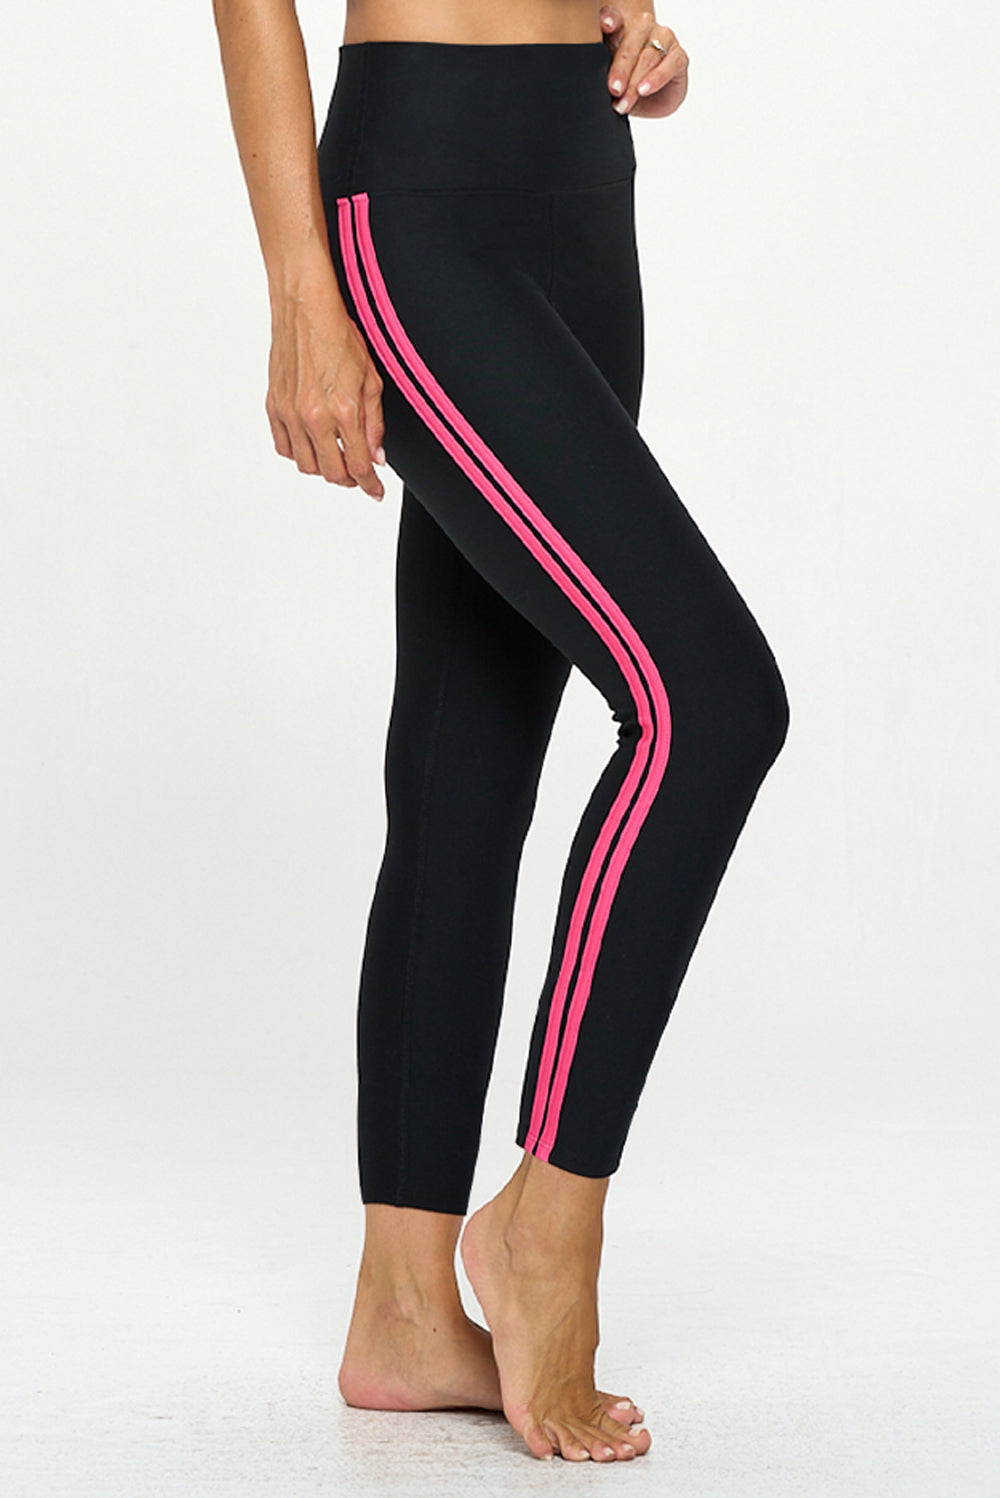 Madison - Black - Hot Pink Stripes - 7/8 Legging (High-Waist)